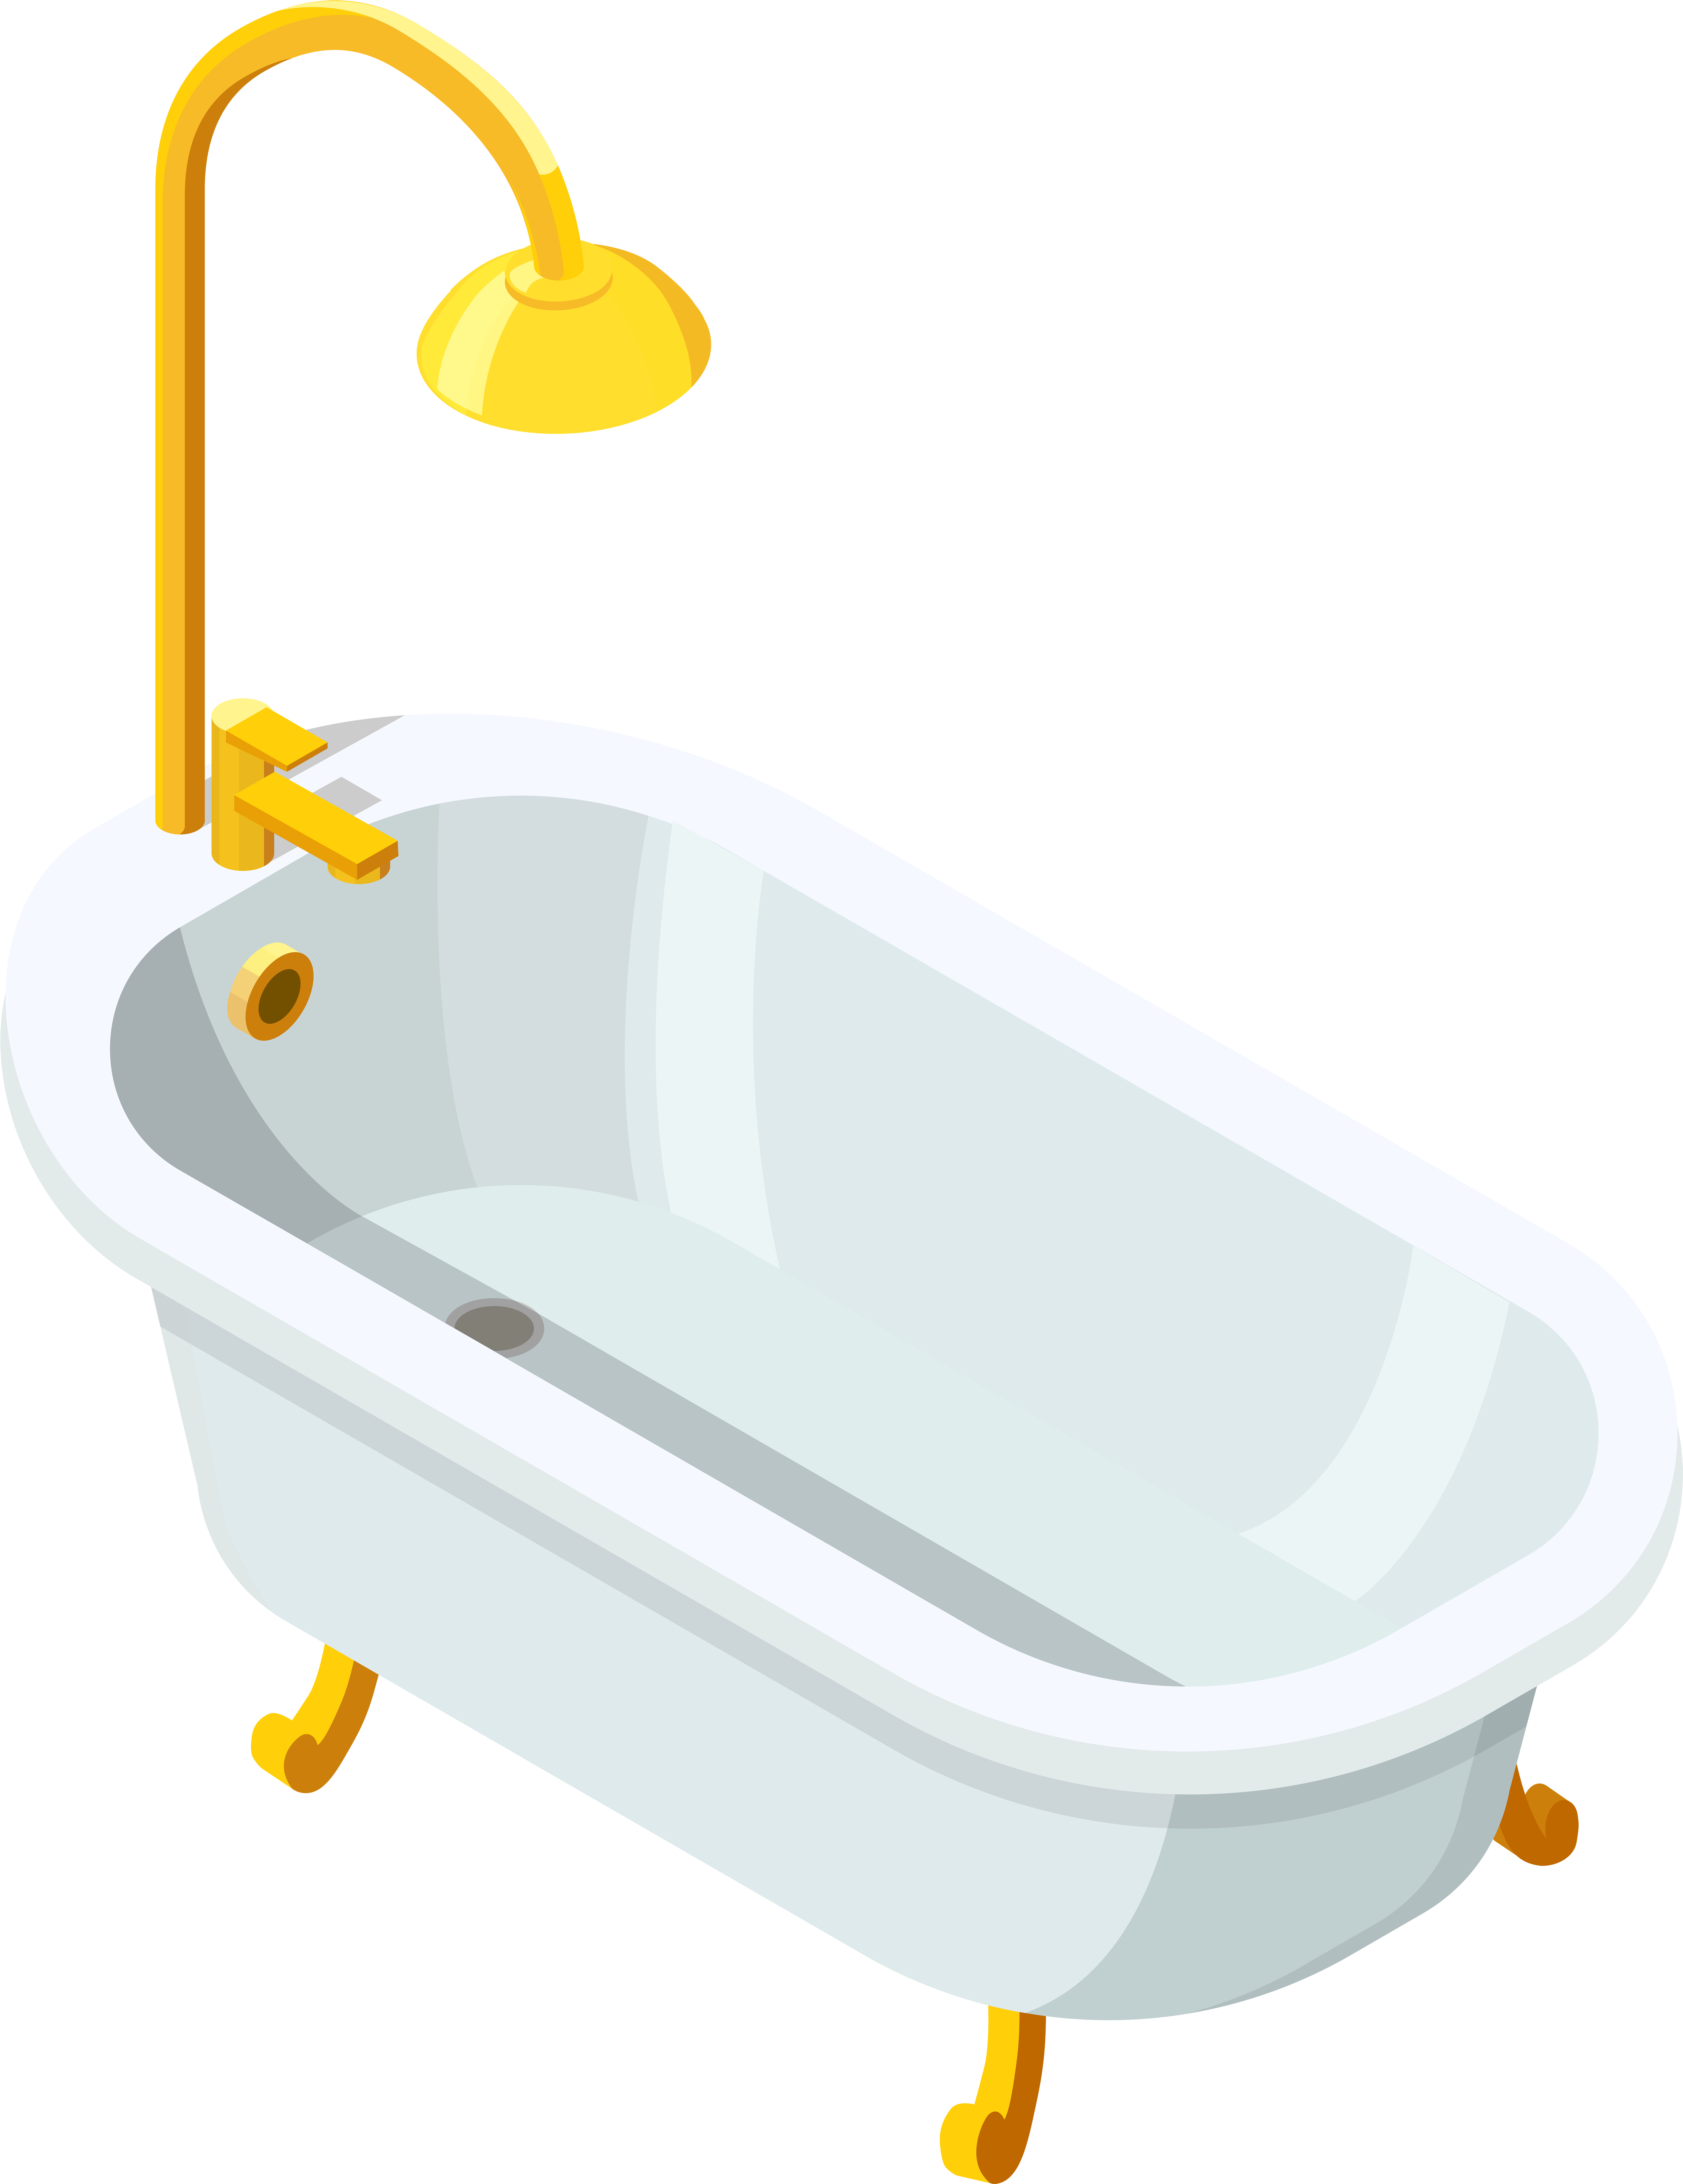 A Bathtub With A Gold Shower Head